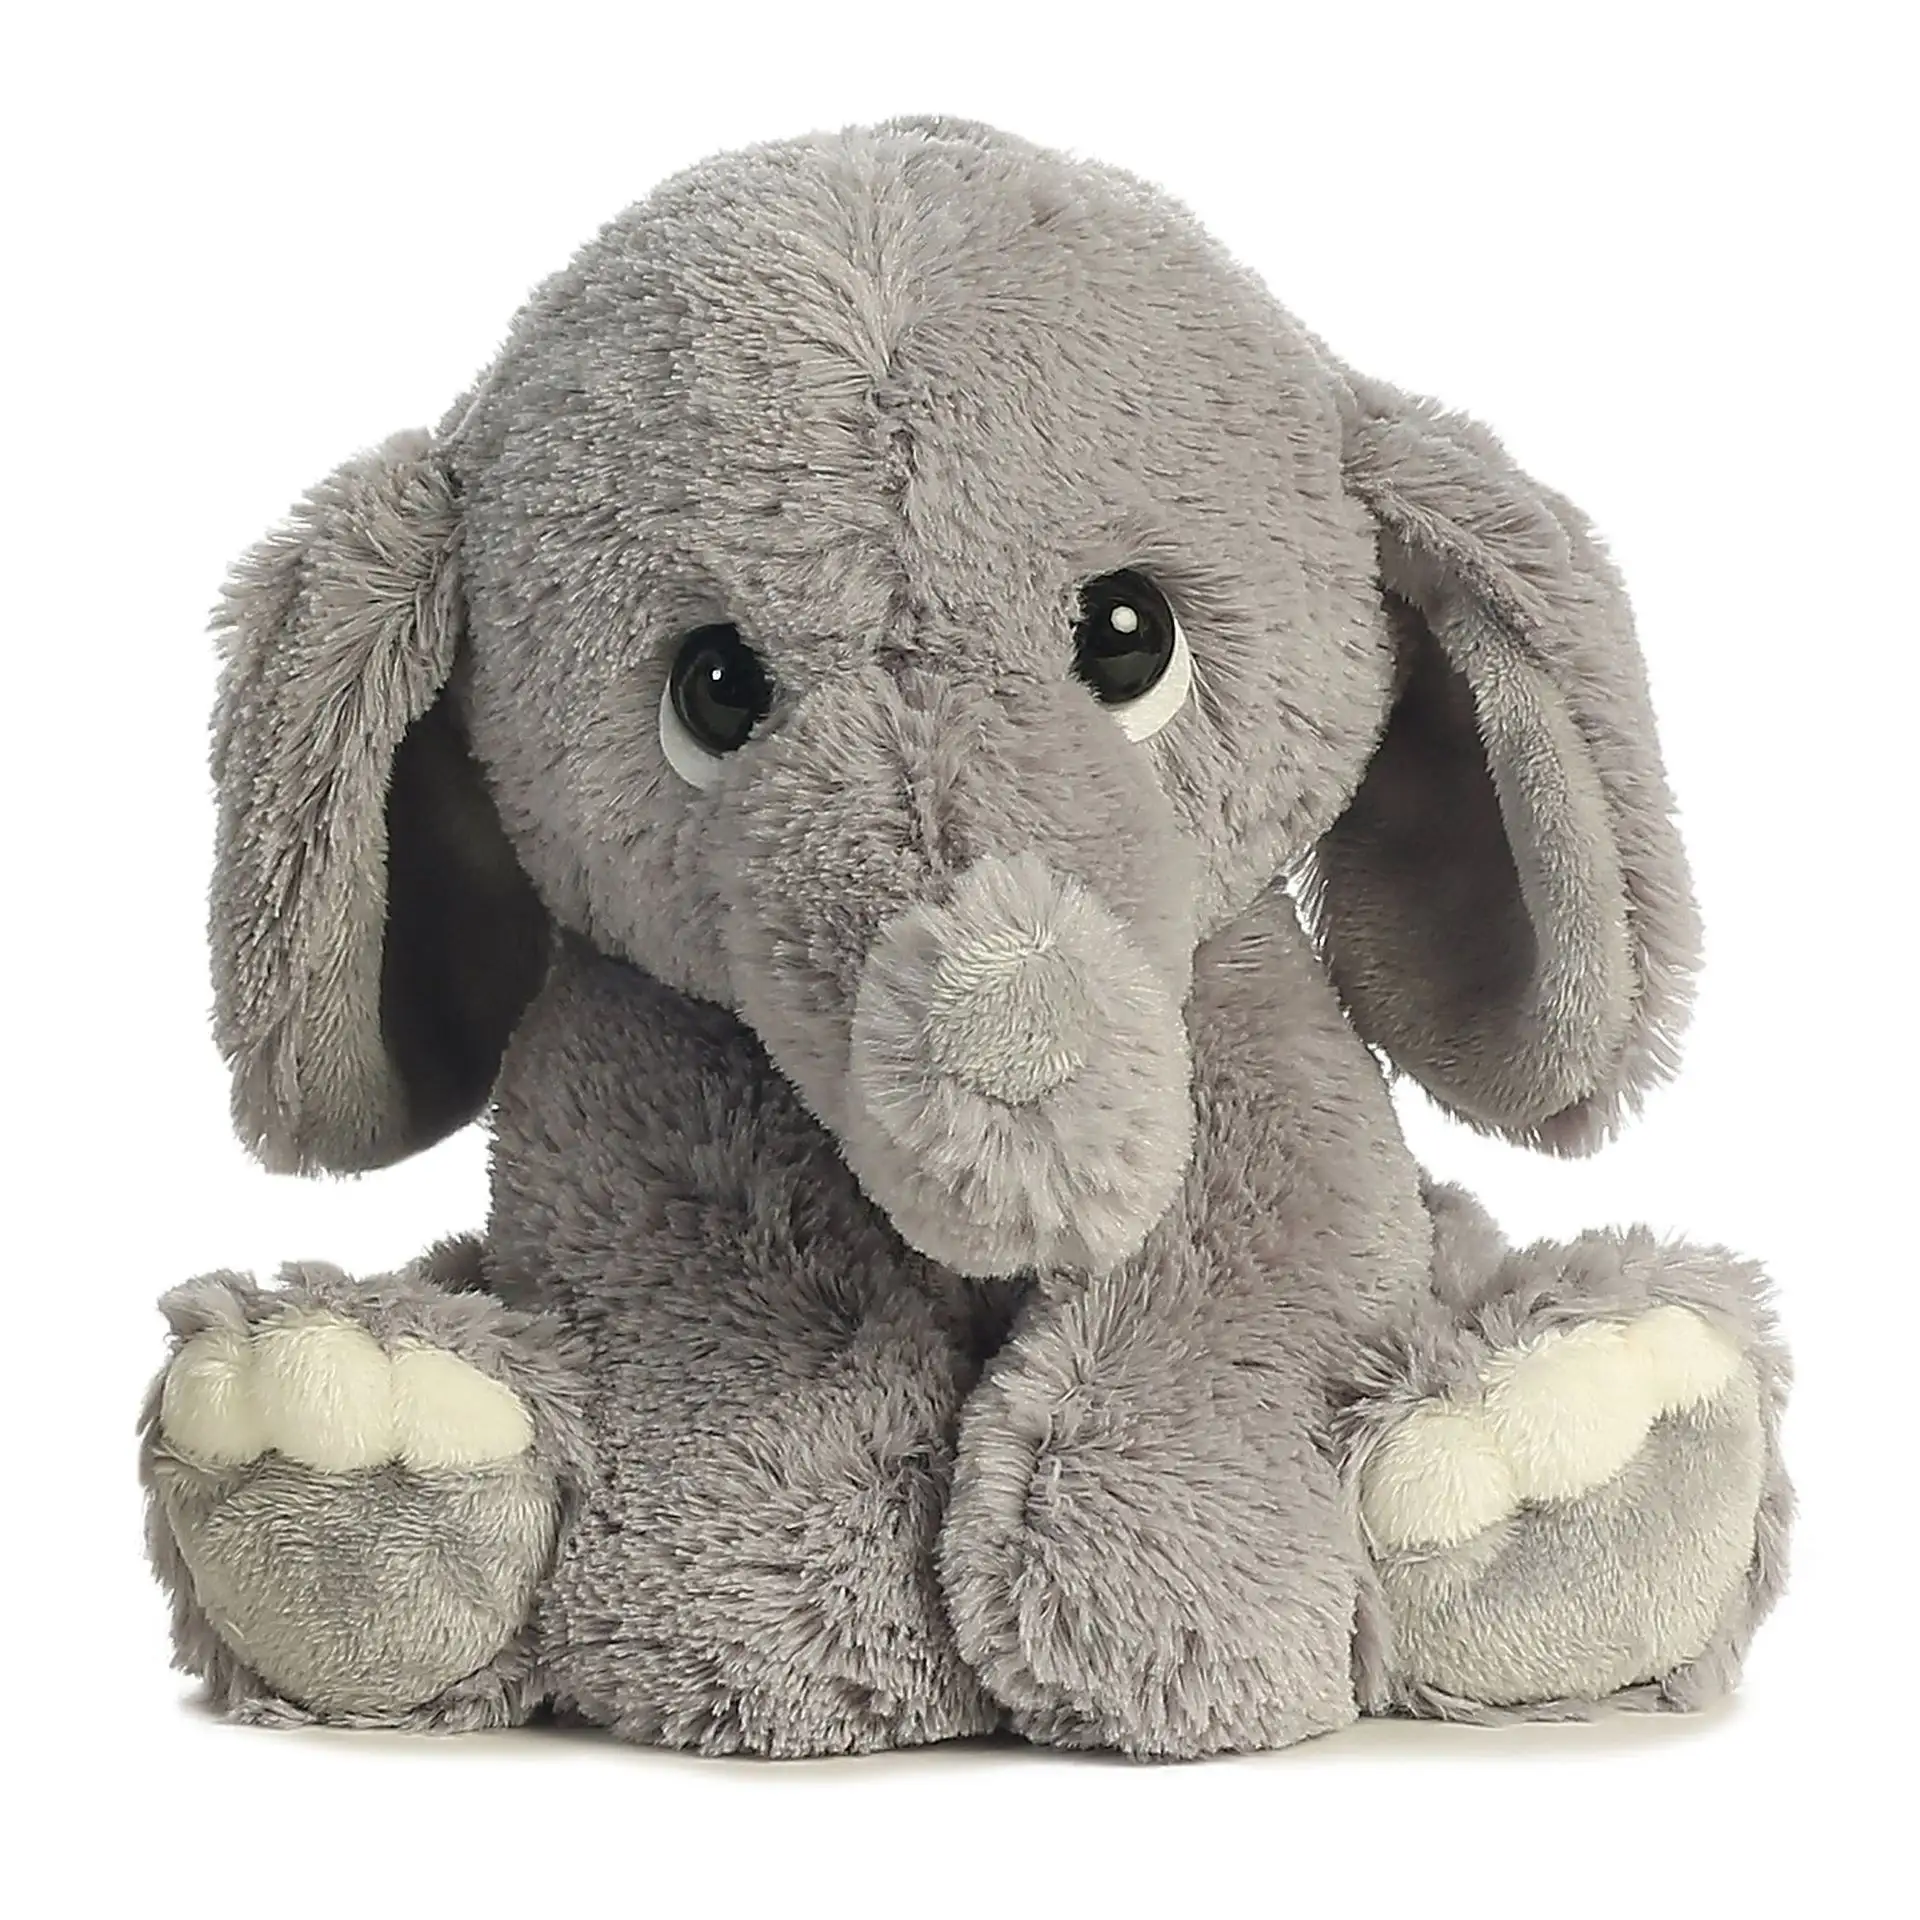 Educational Talking Singing Musical Baby Soft Baby Elephant Plush Toy Custom Audio Stuffed Animal Toy With Speaker